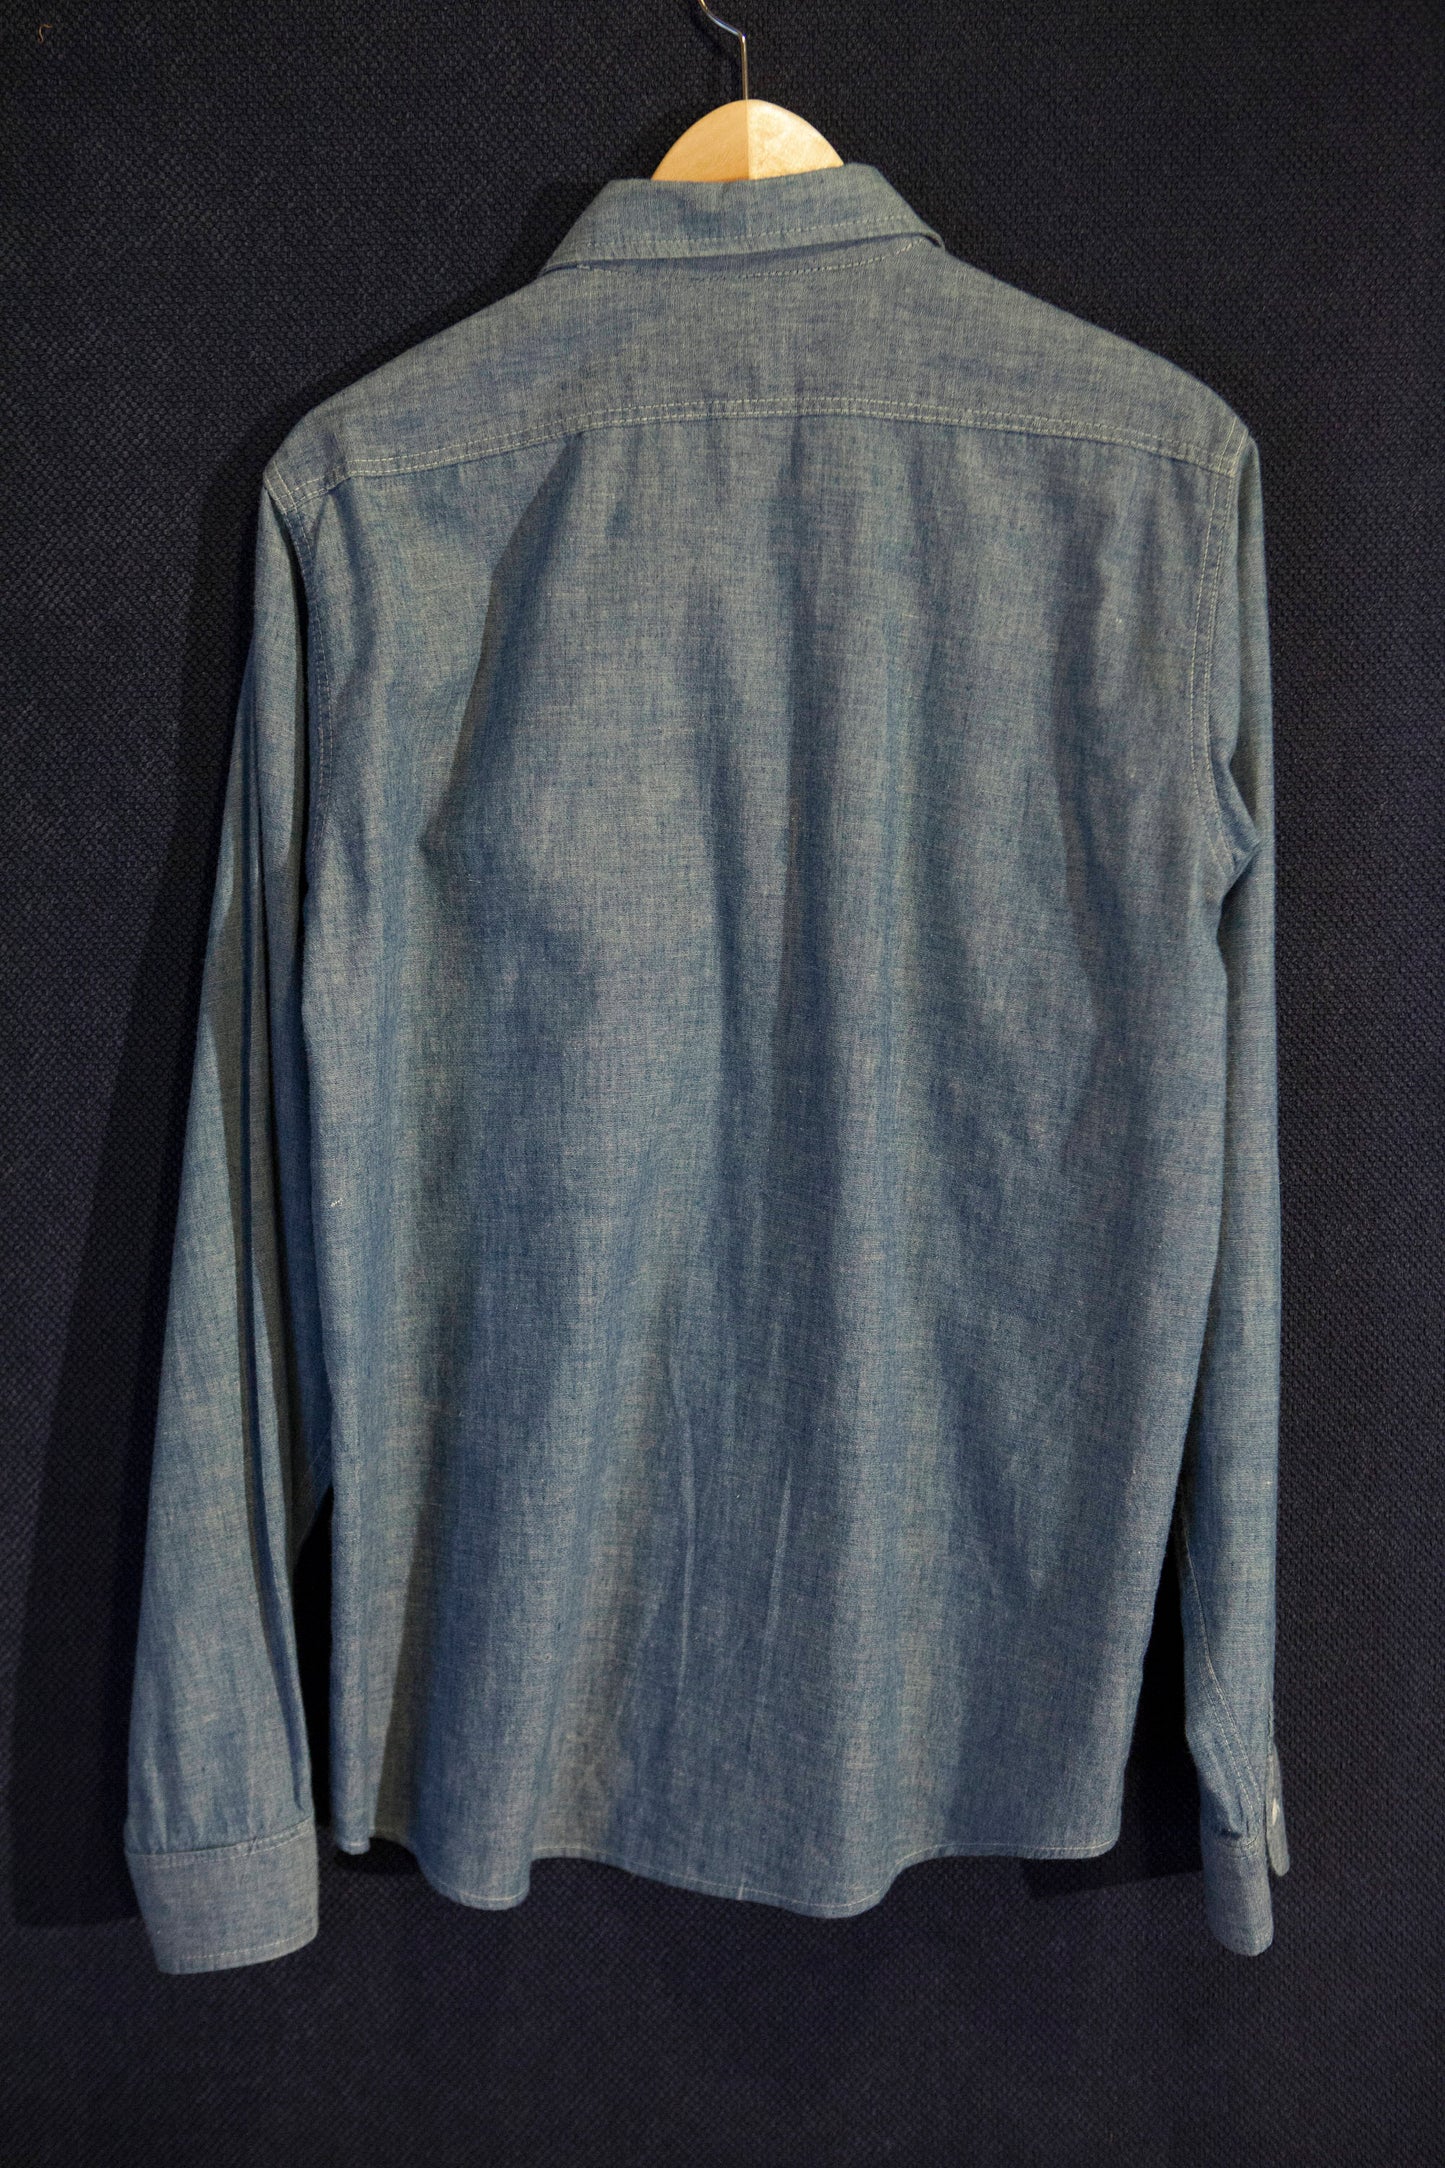 Vintage Osh Kosh B'Gosh 100% Cotton Chambray Workshirt with Acorn Pockets and Pen Holder Size Large